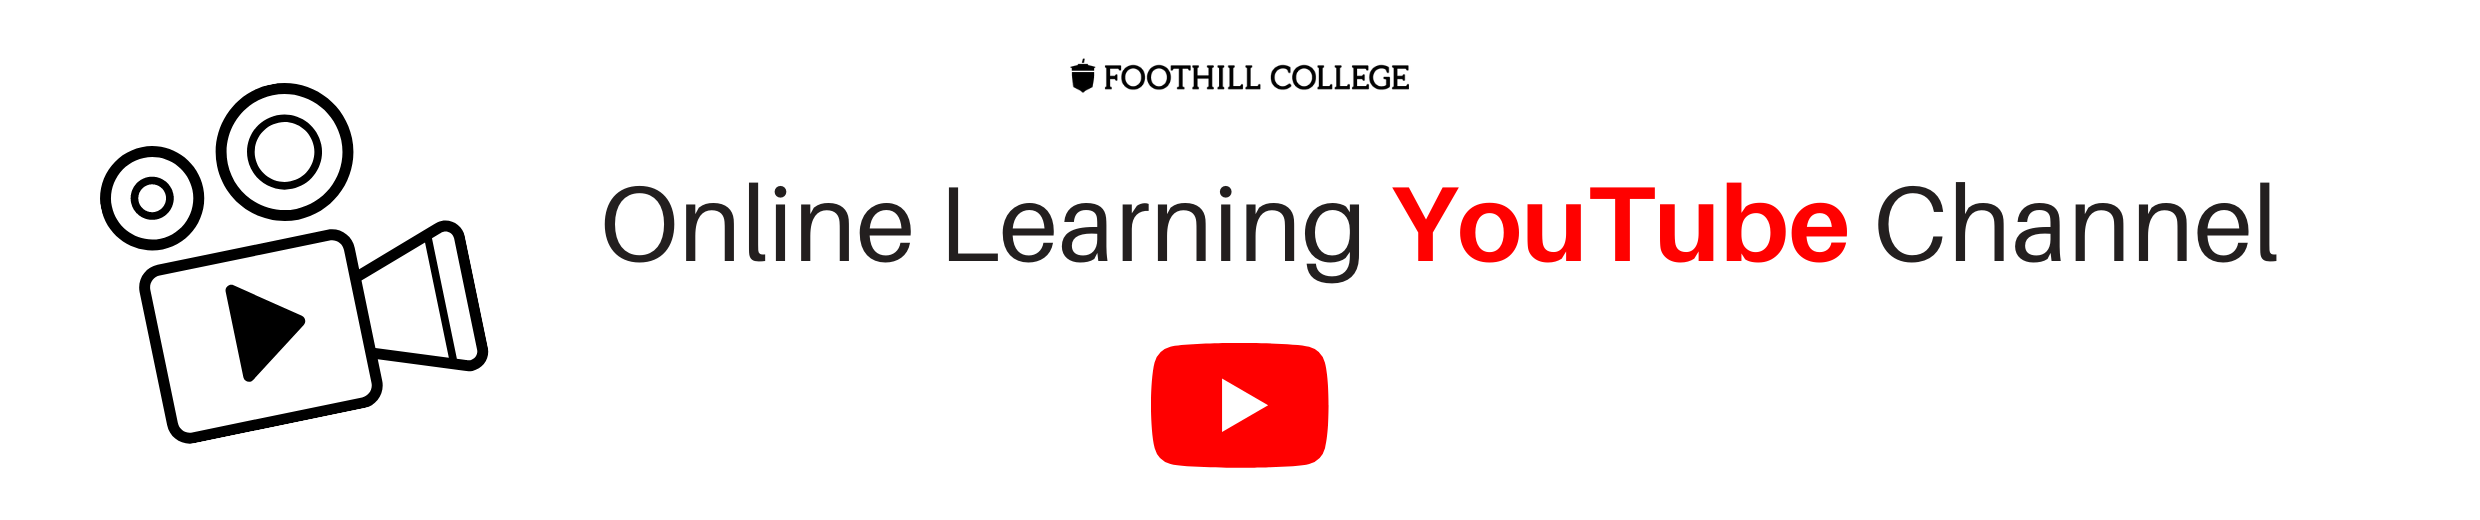 Online Learning YouTube Channel